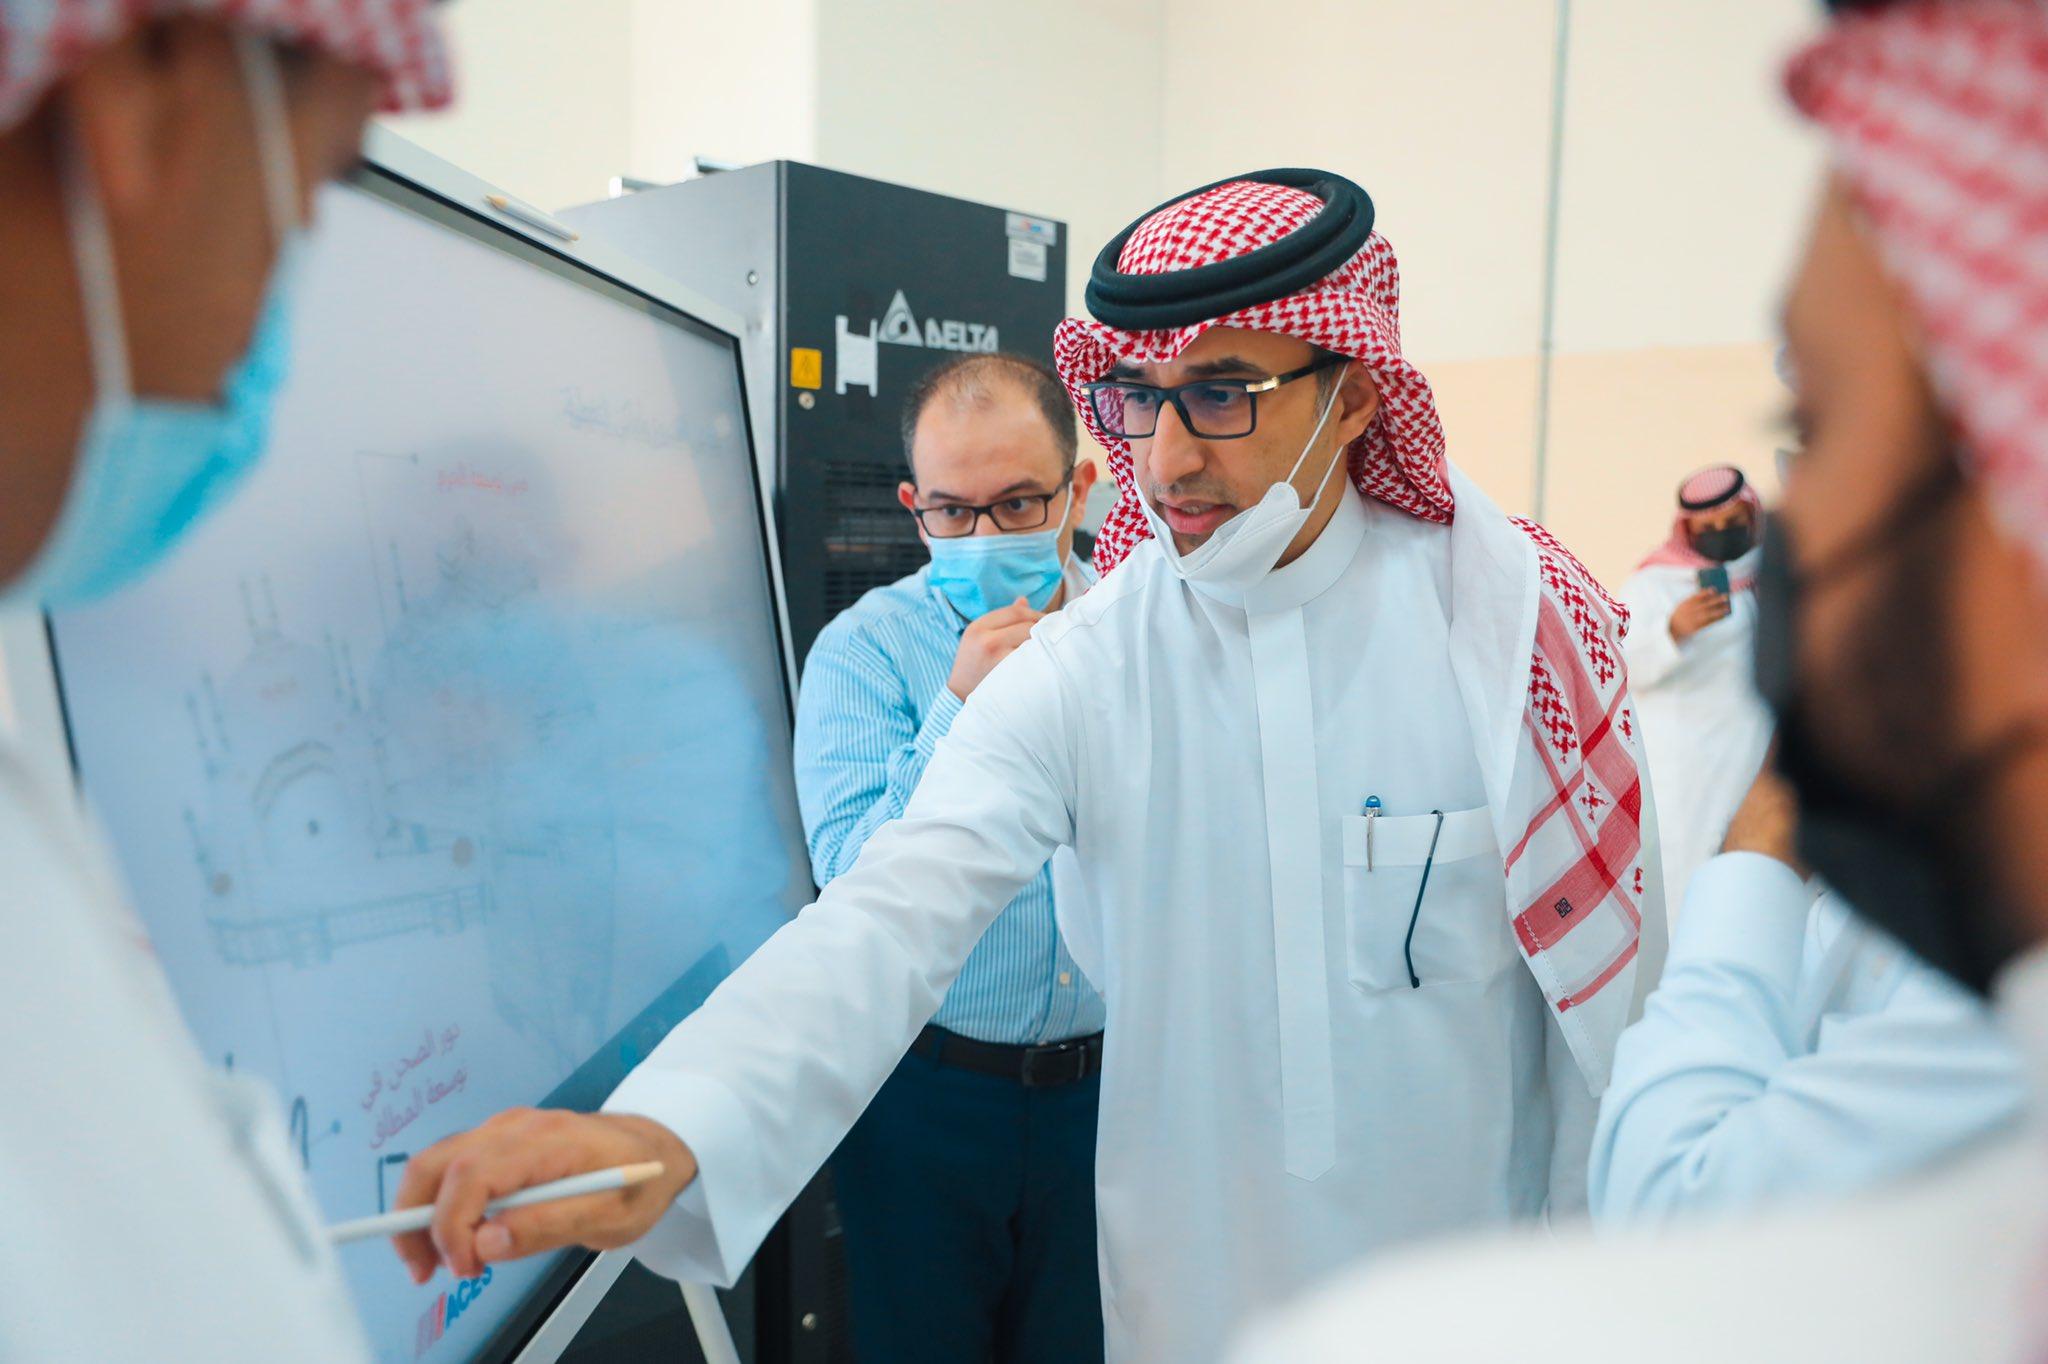 Riyadh Techstars Begins Registering Technology Startups For First Time In Saudi Arabia